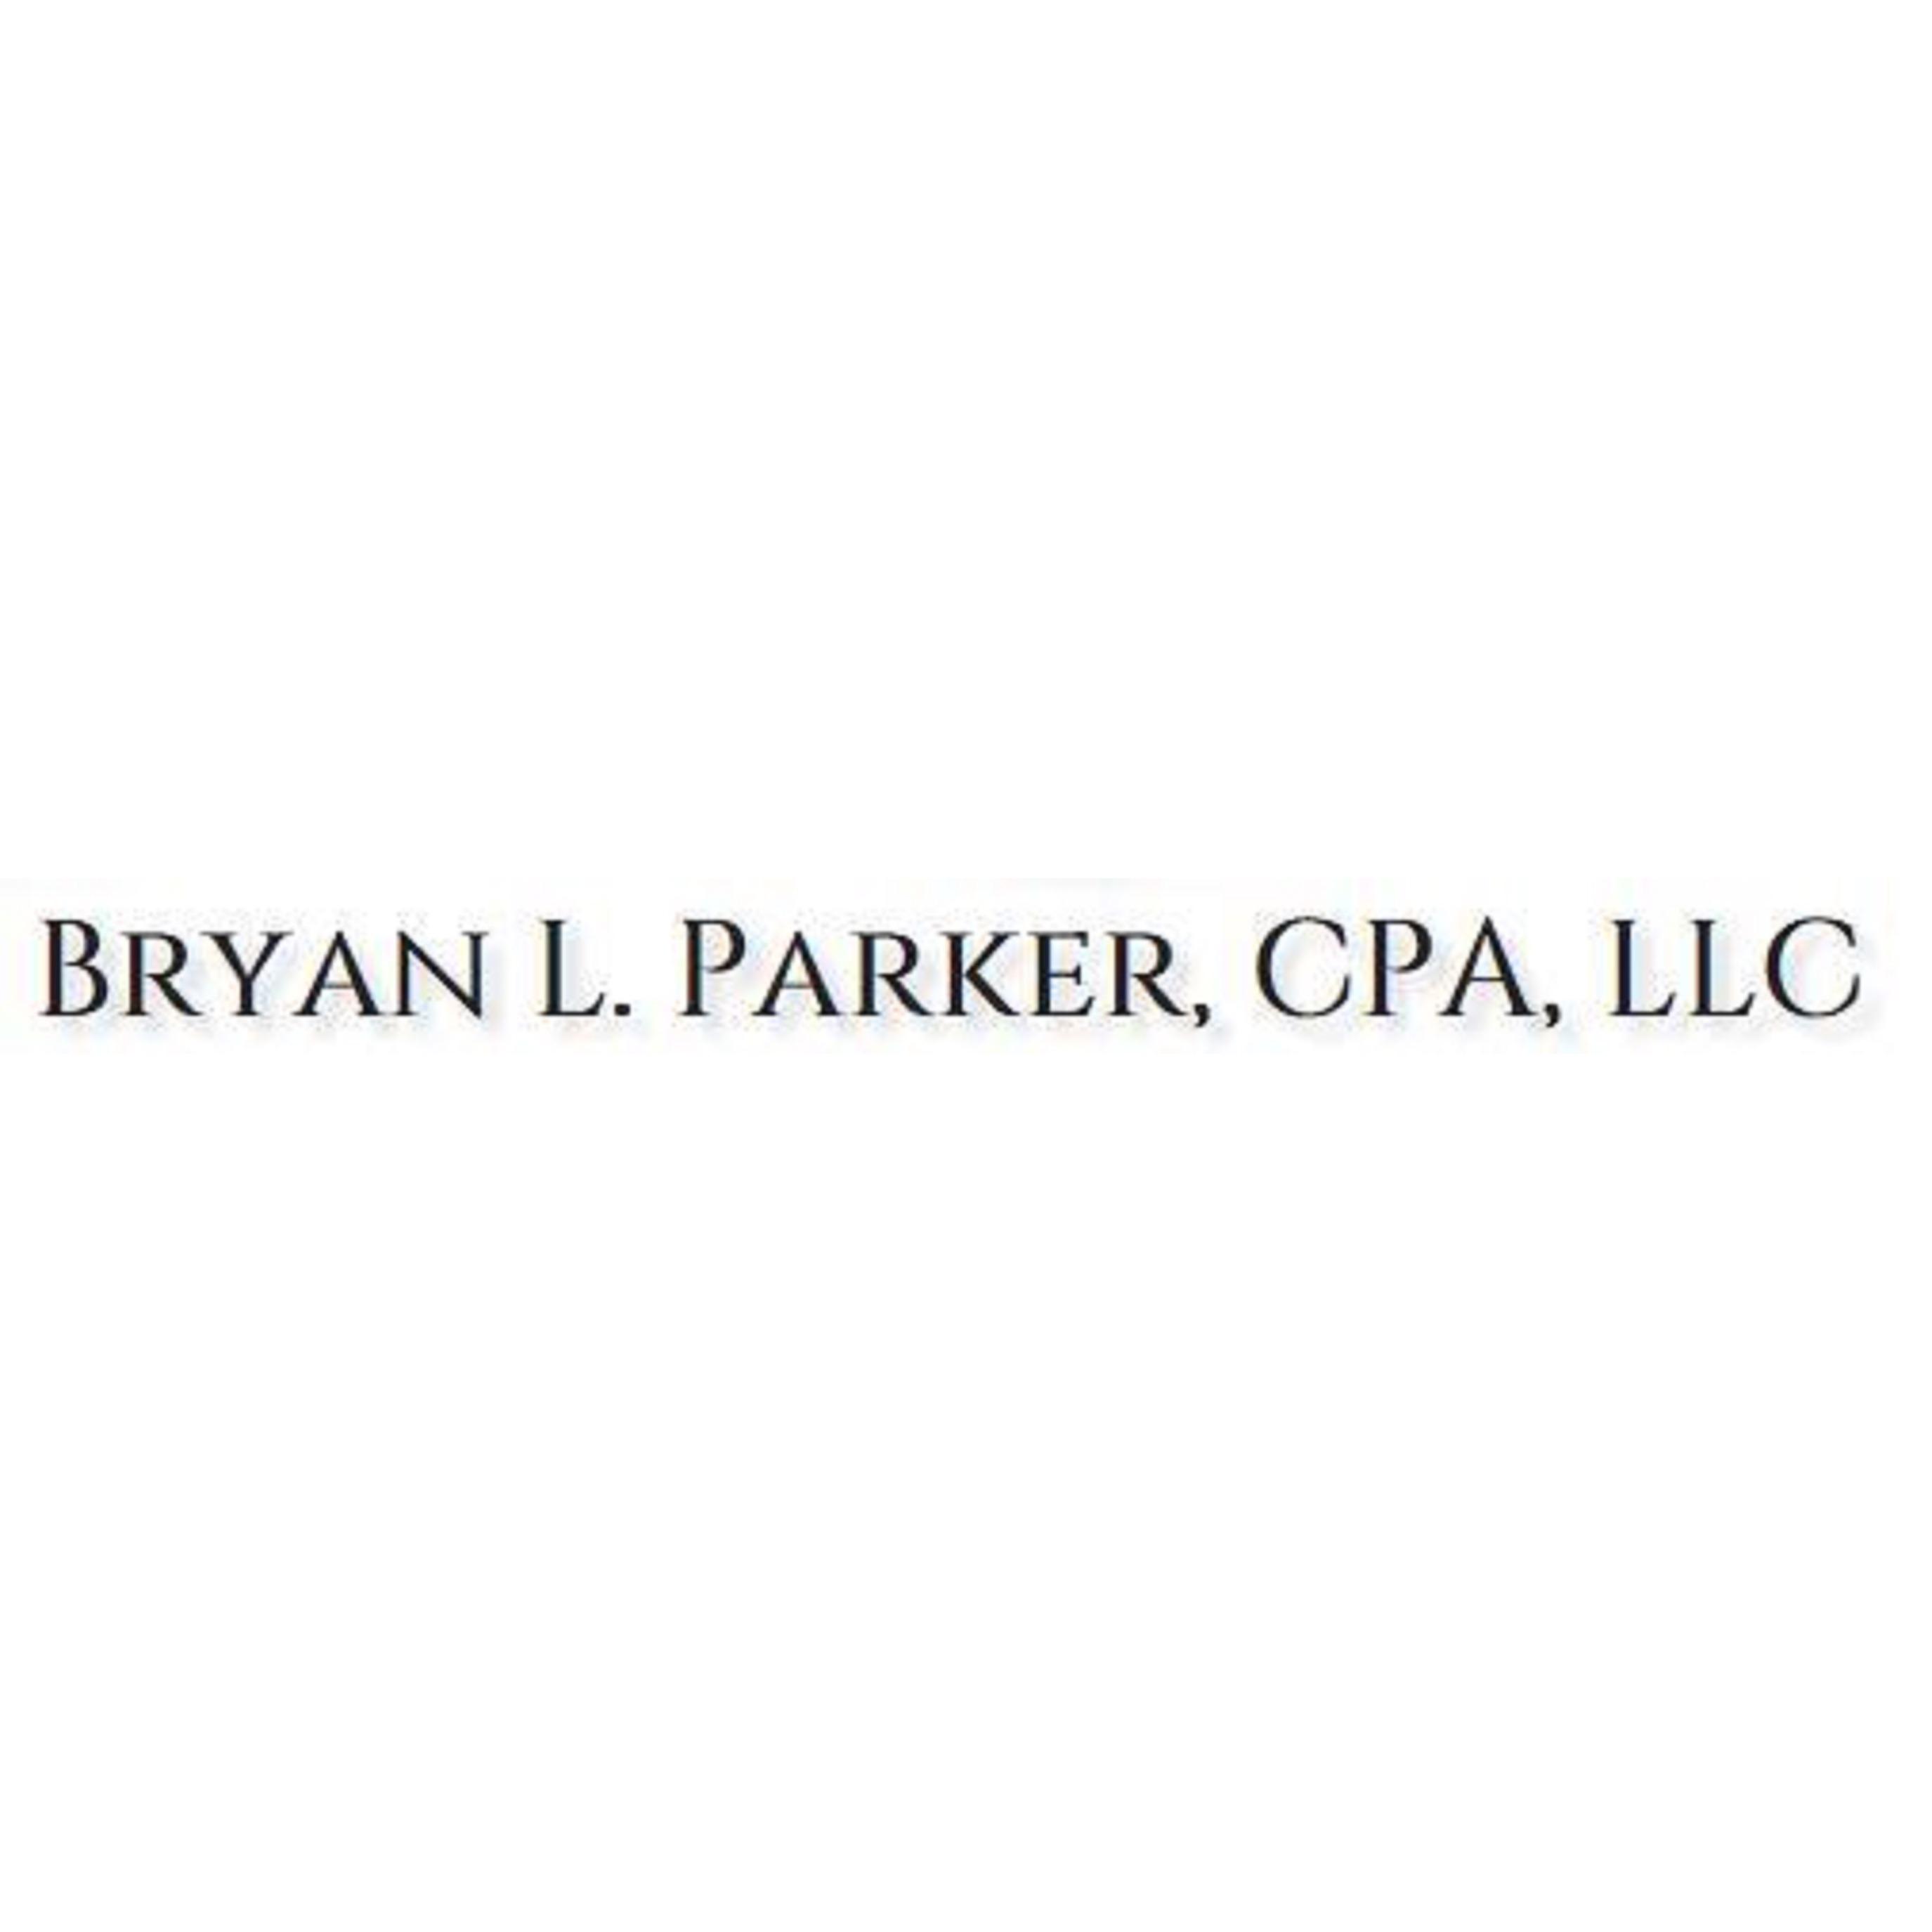 Bryan L. Parker, CPA, LLC